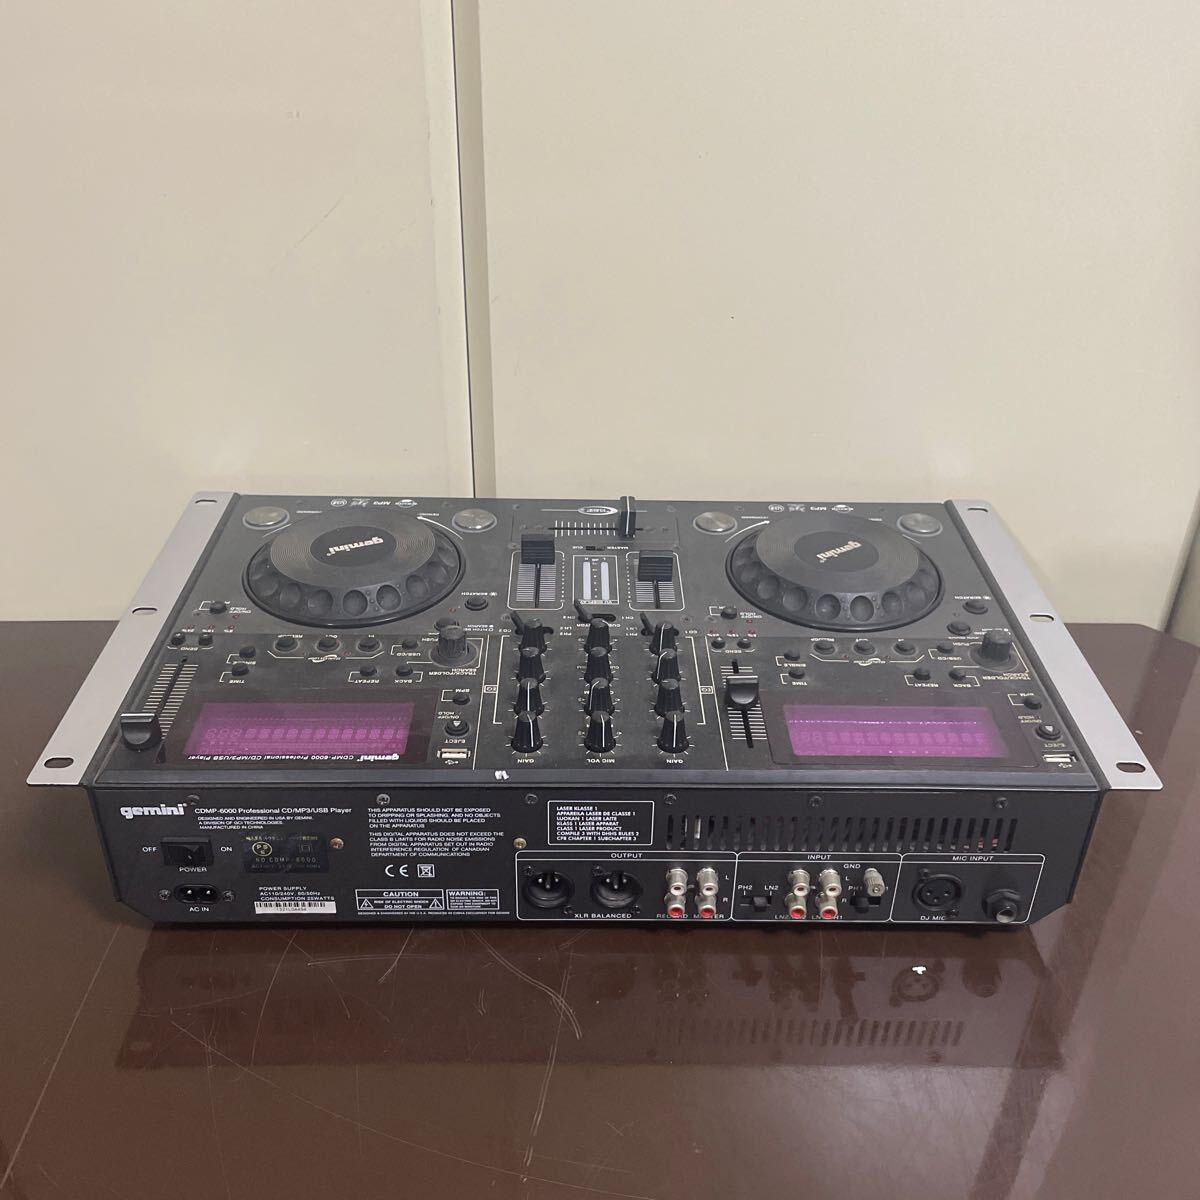  выход звука OK gemini Jemini CDMP-6000 Professional CD MP3/USB Player DJ оборудование DJ миксер смешивание консоль 